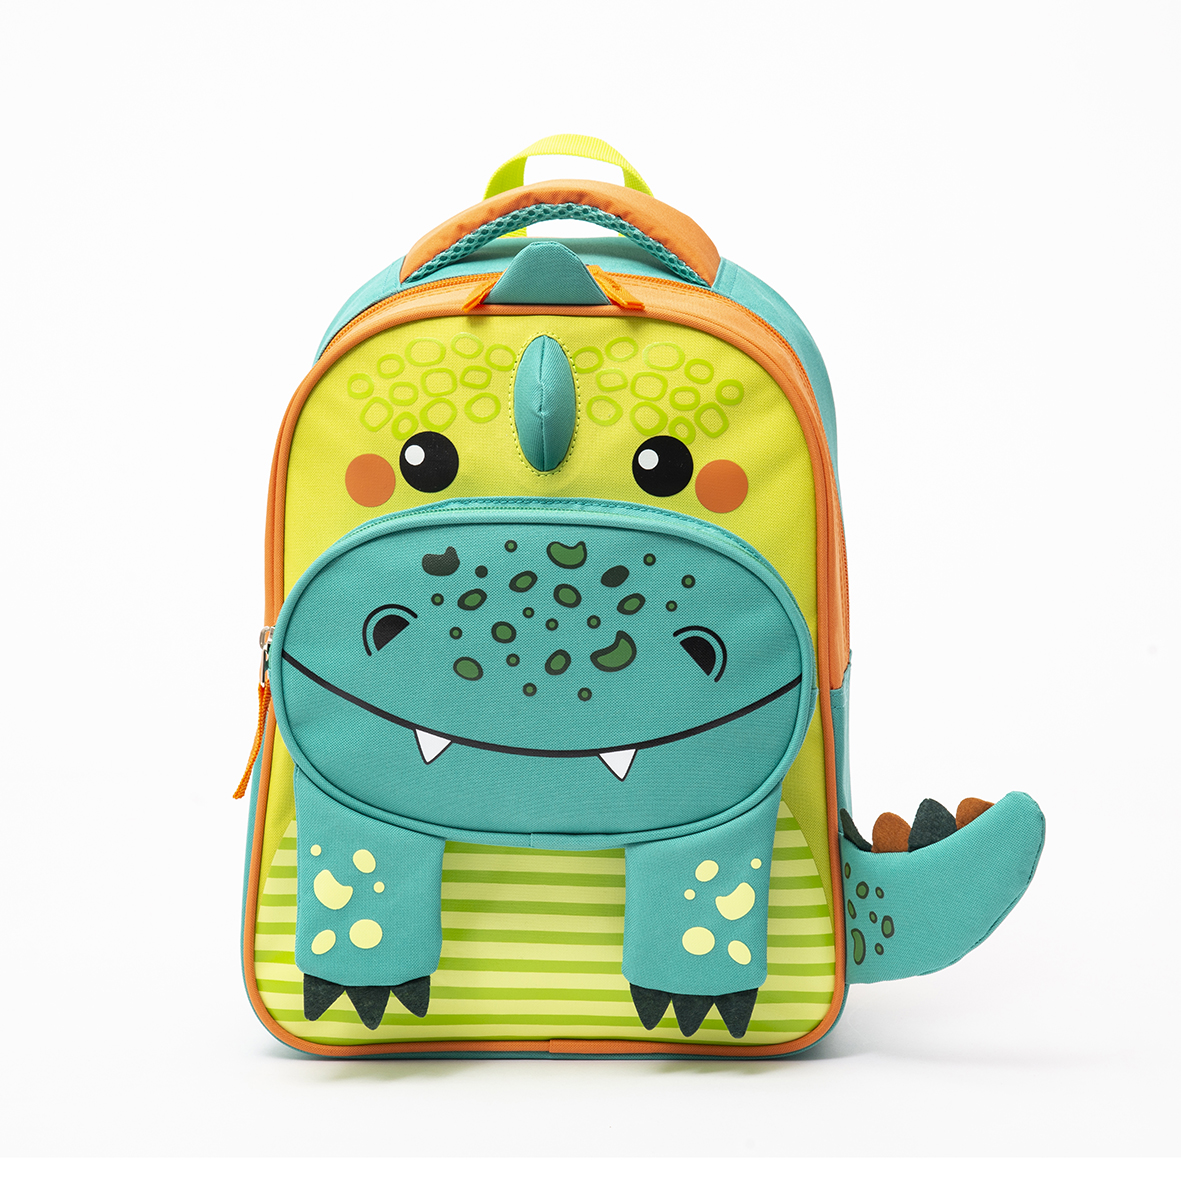 100% Original Sequin Backpack For Kids – New design cute stereoscopic green crocodile kids bag – Twinkling Star